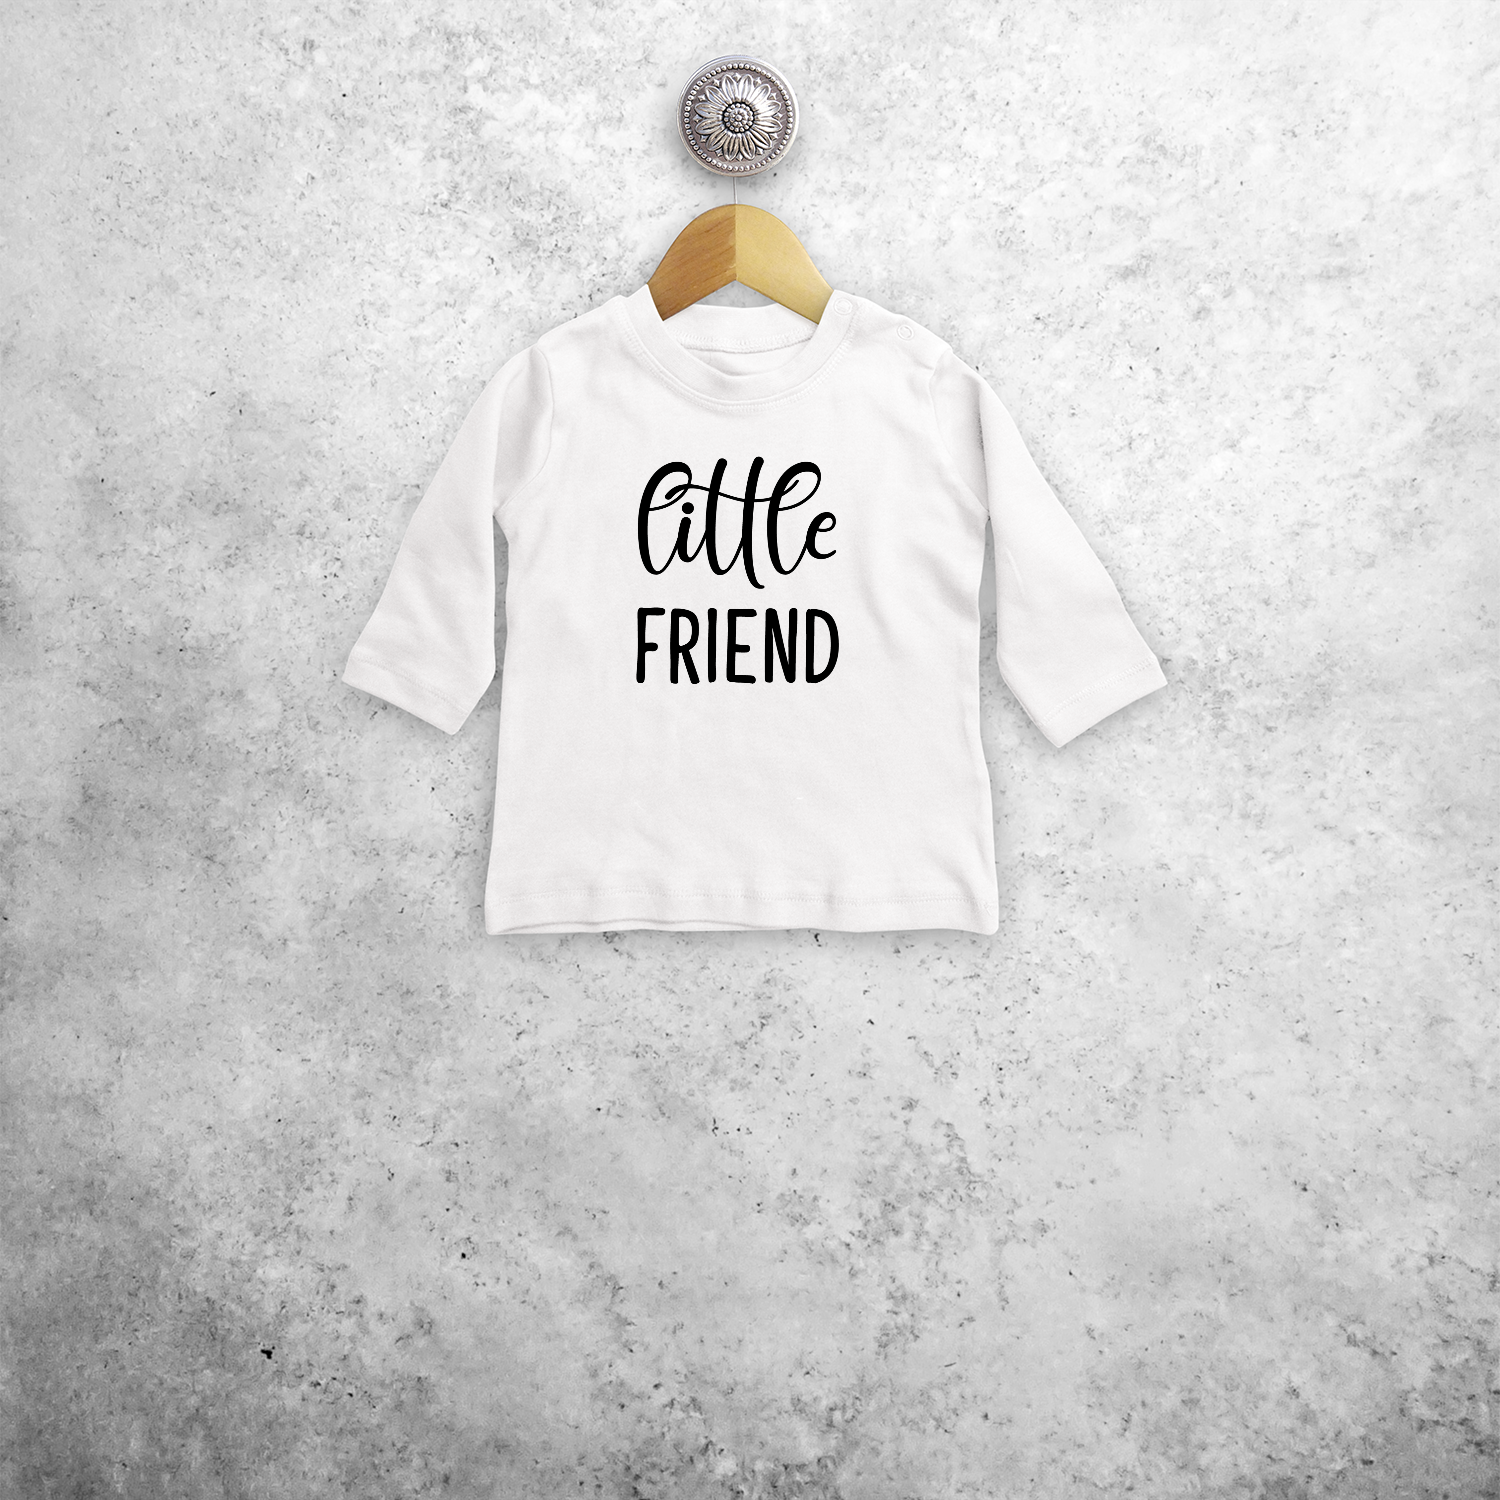 'Little friend' baby longsleeve shirt